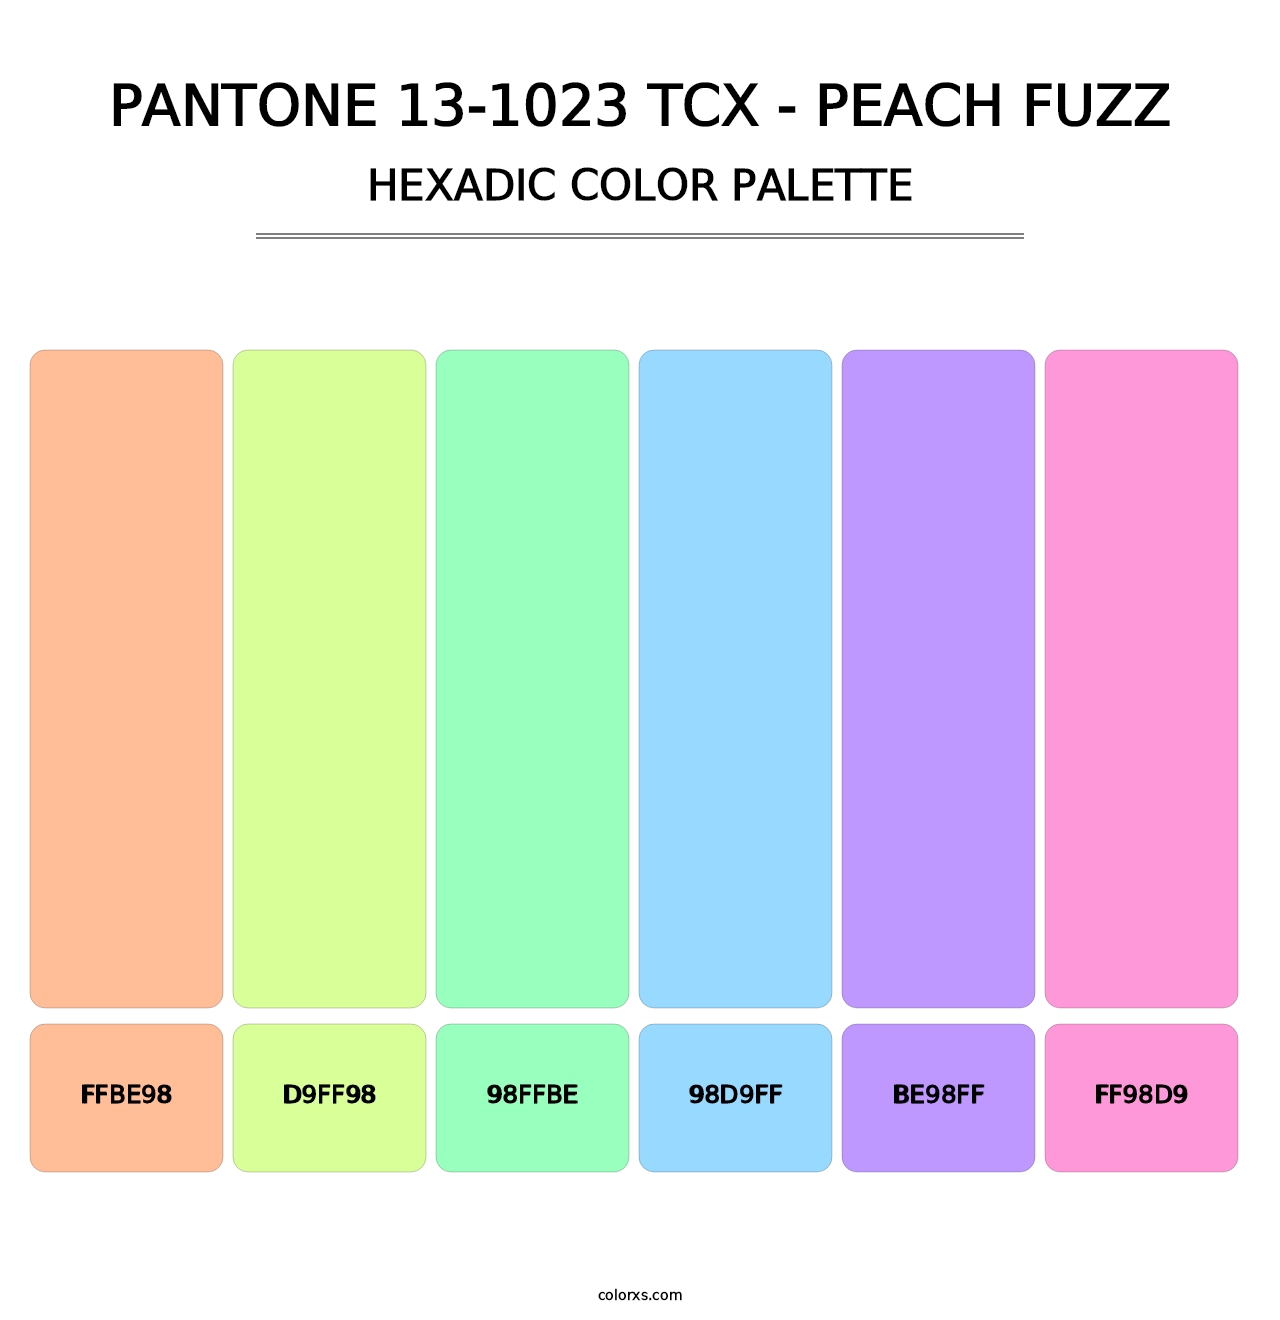 PANTONE 13-1023 TCX - Peach Fuzz - Hexadic Color Palette